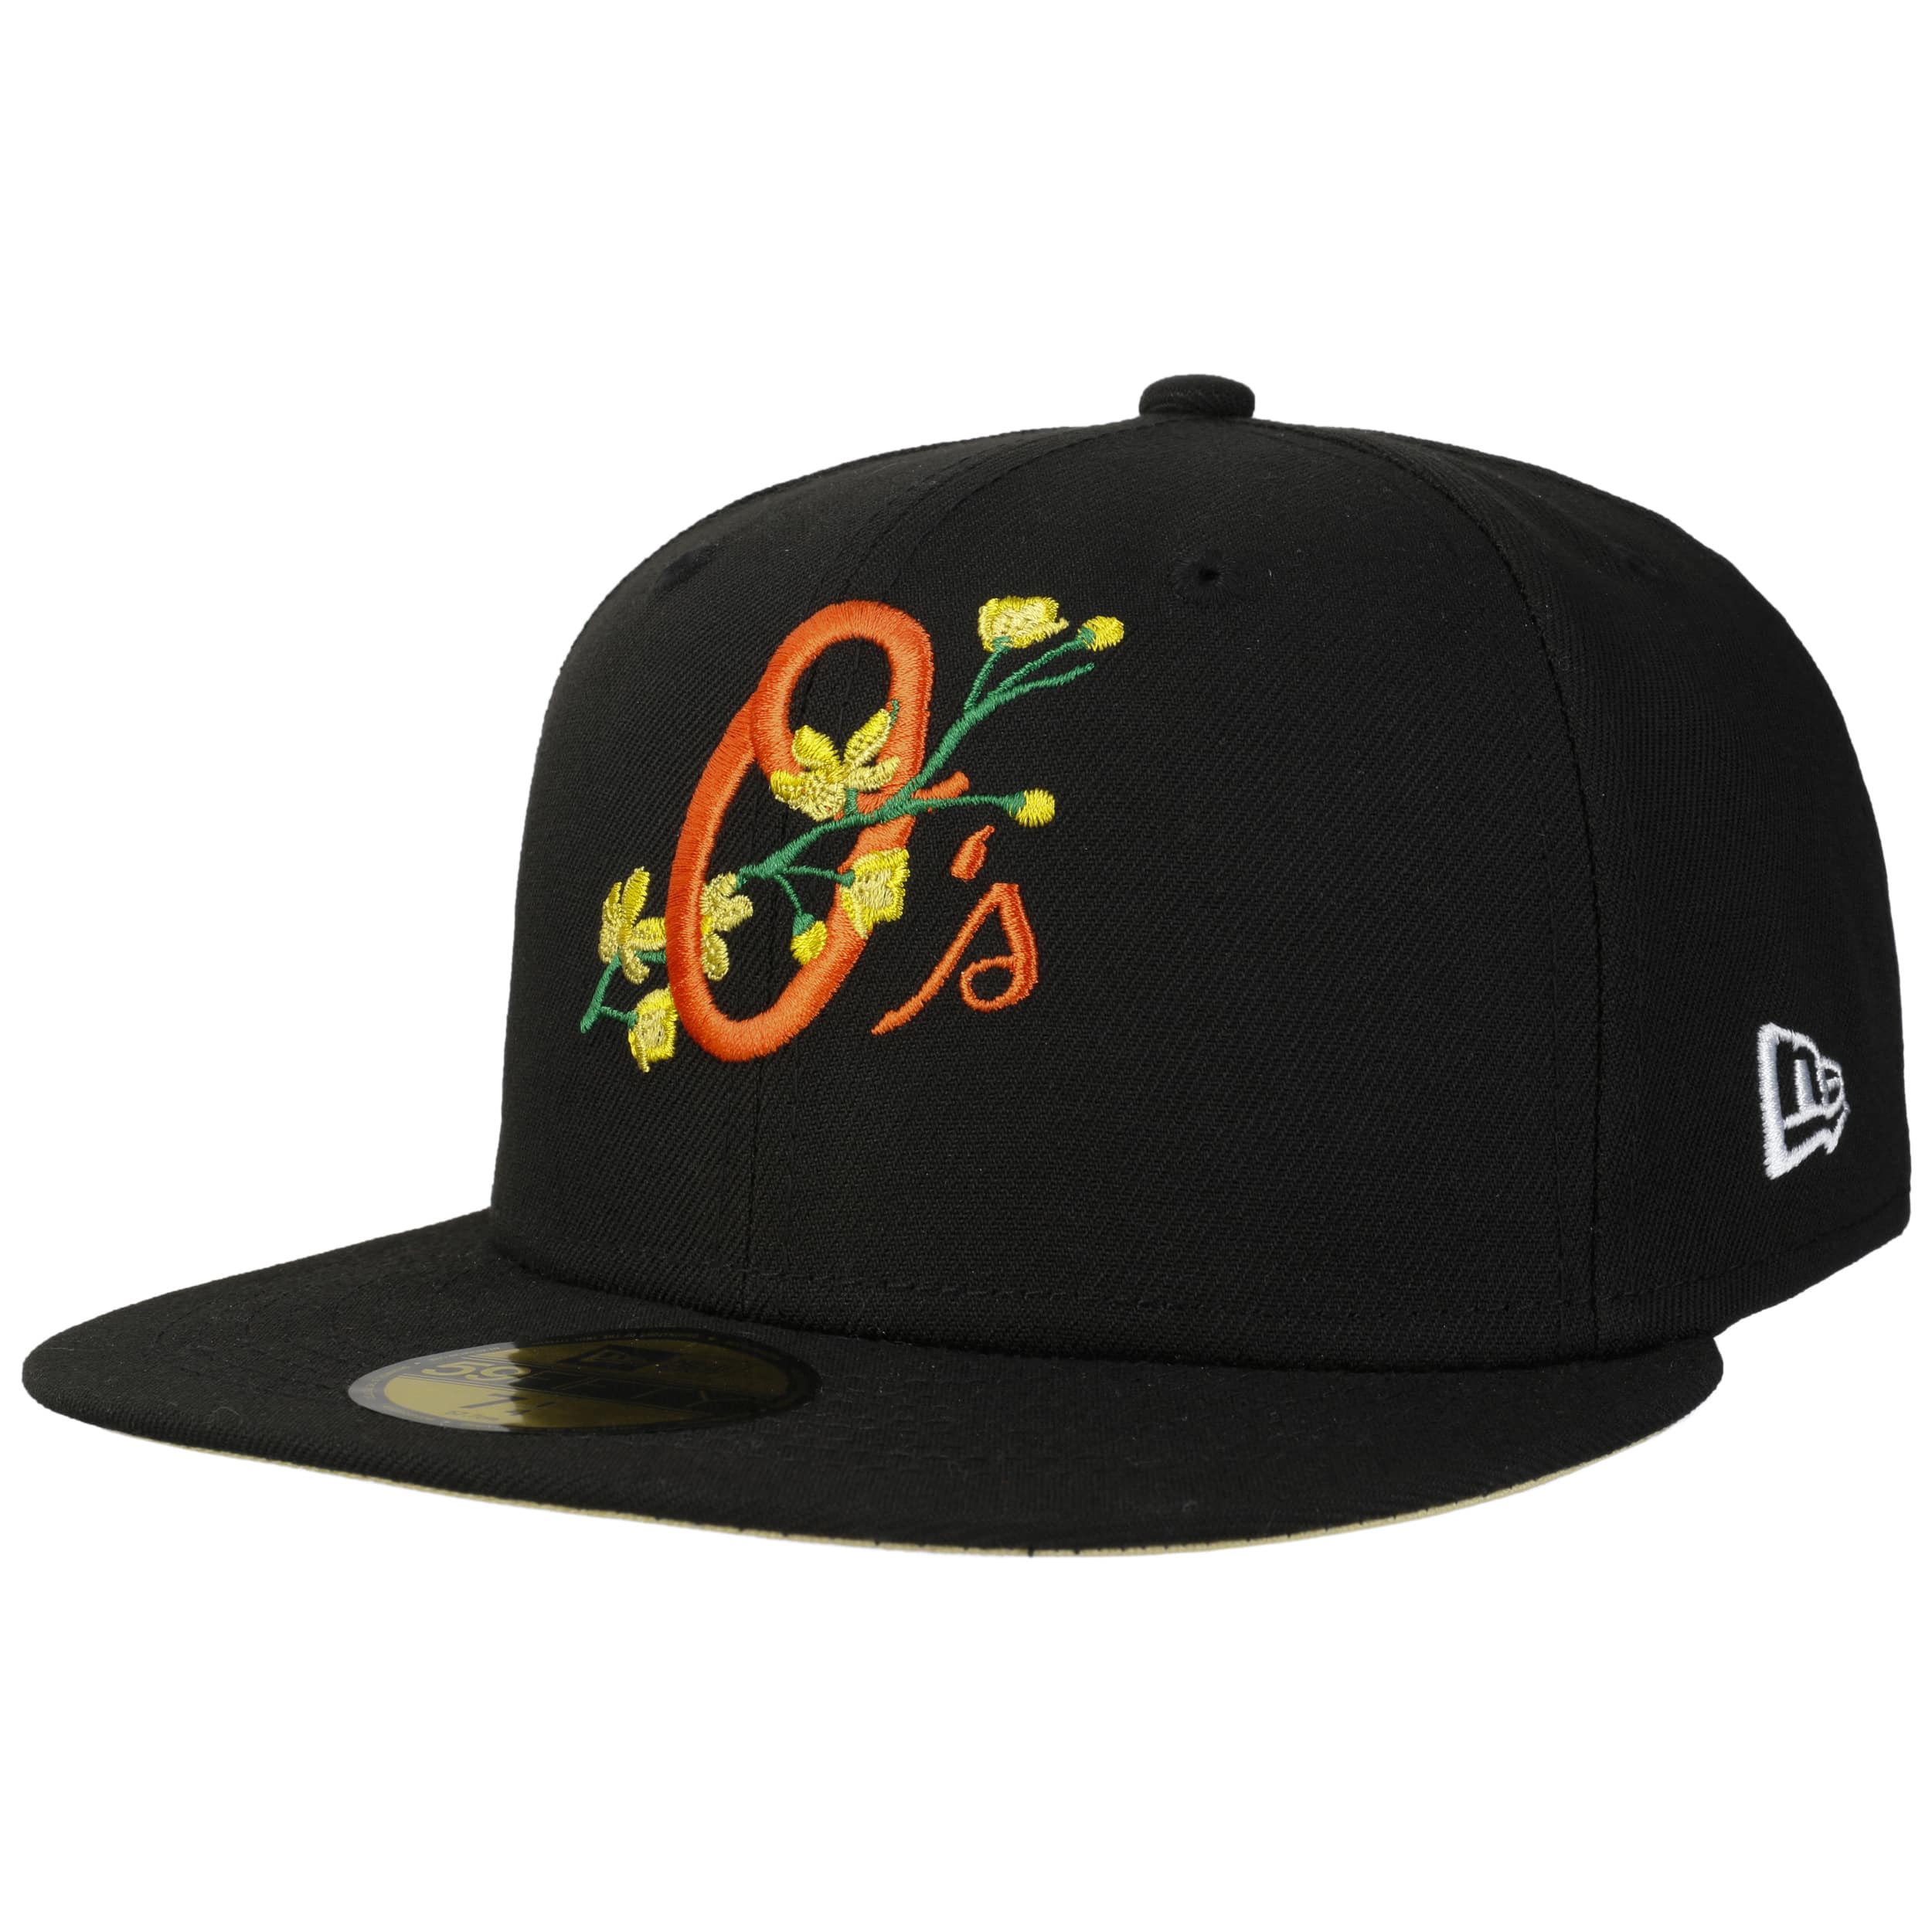 Bucket Hats For Men, Baltimore Orioles Snapbacks Hats